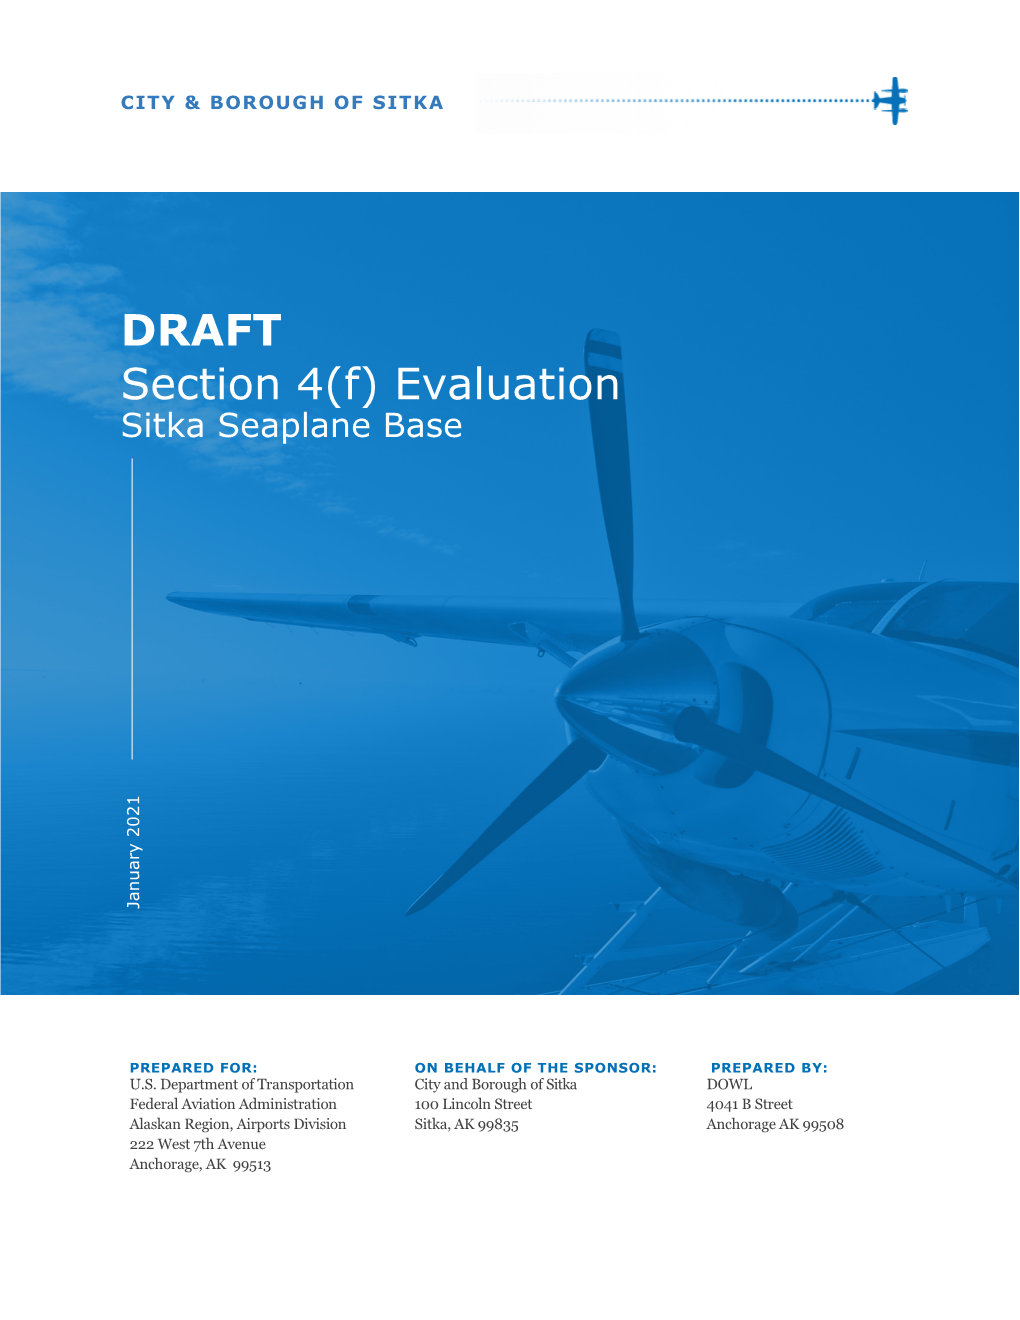 DRAFT Section 4(F) Evaluation Sitka Seaplane Base